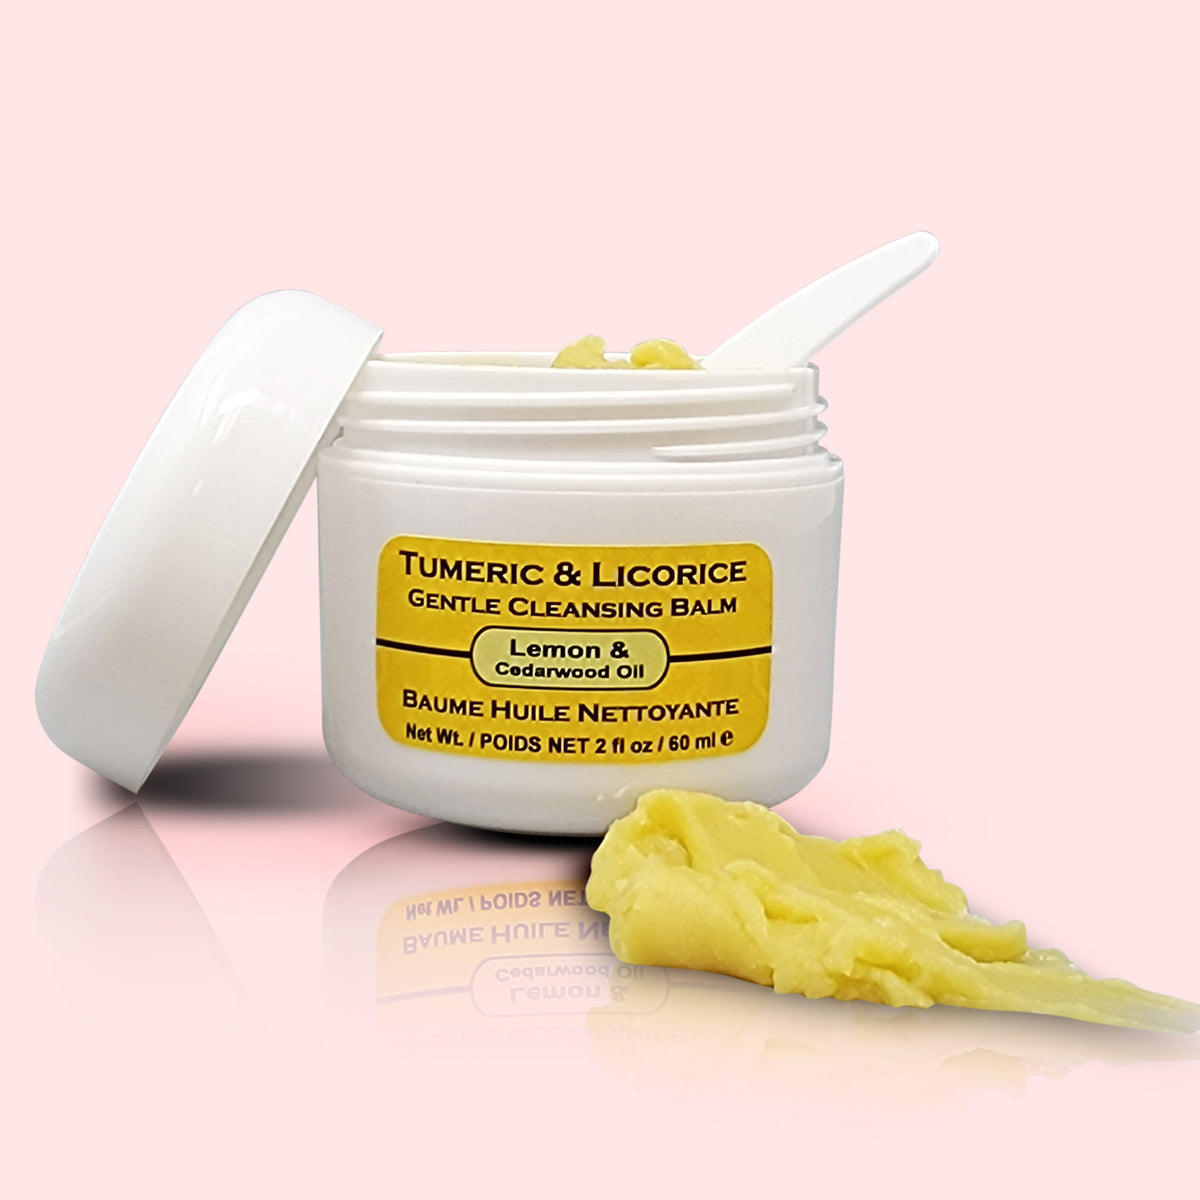 Tumeric & Licorice Gentle Cleansing Balm